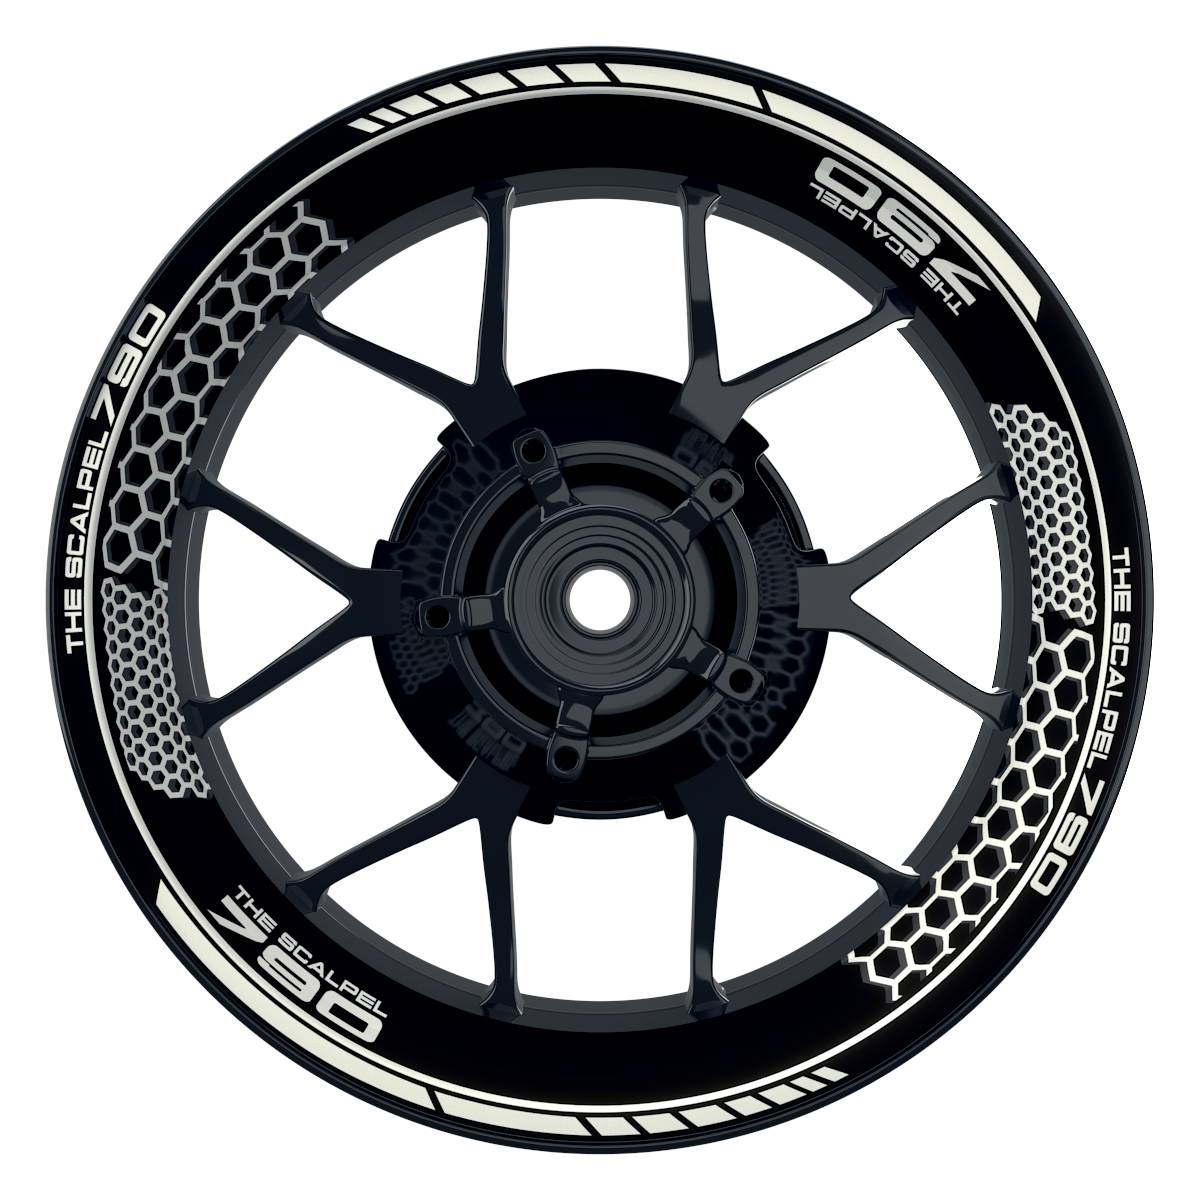 THE SCALPEL 790 Hexagon schwarz weiss Wheelsticker Felgenaufkleber